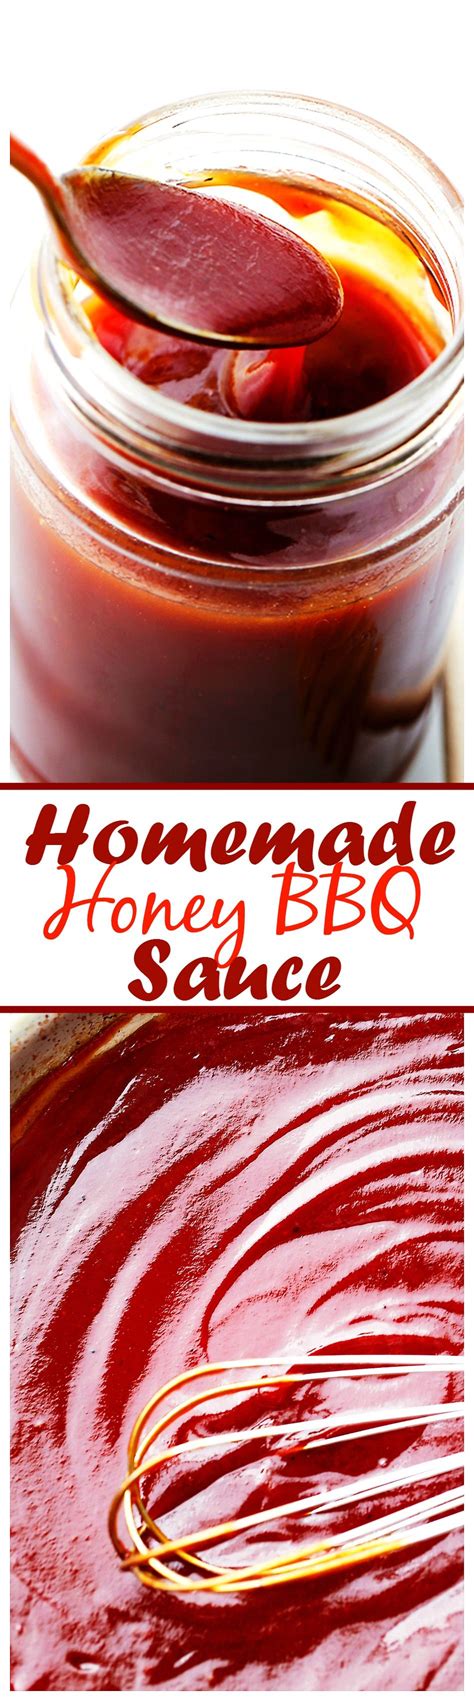 Homemade Honey Barbecue Sauce Quick And Easy Recipe For Homemade